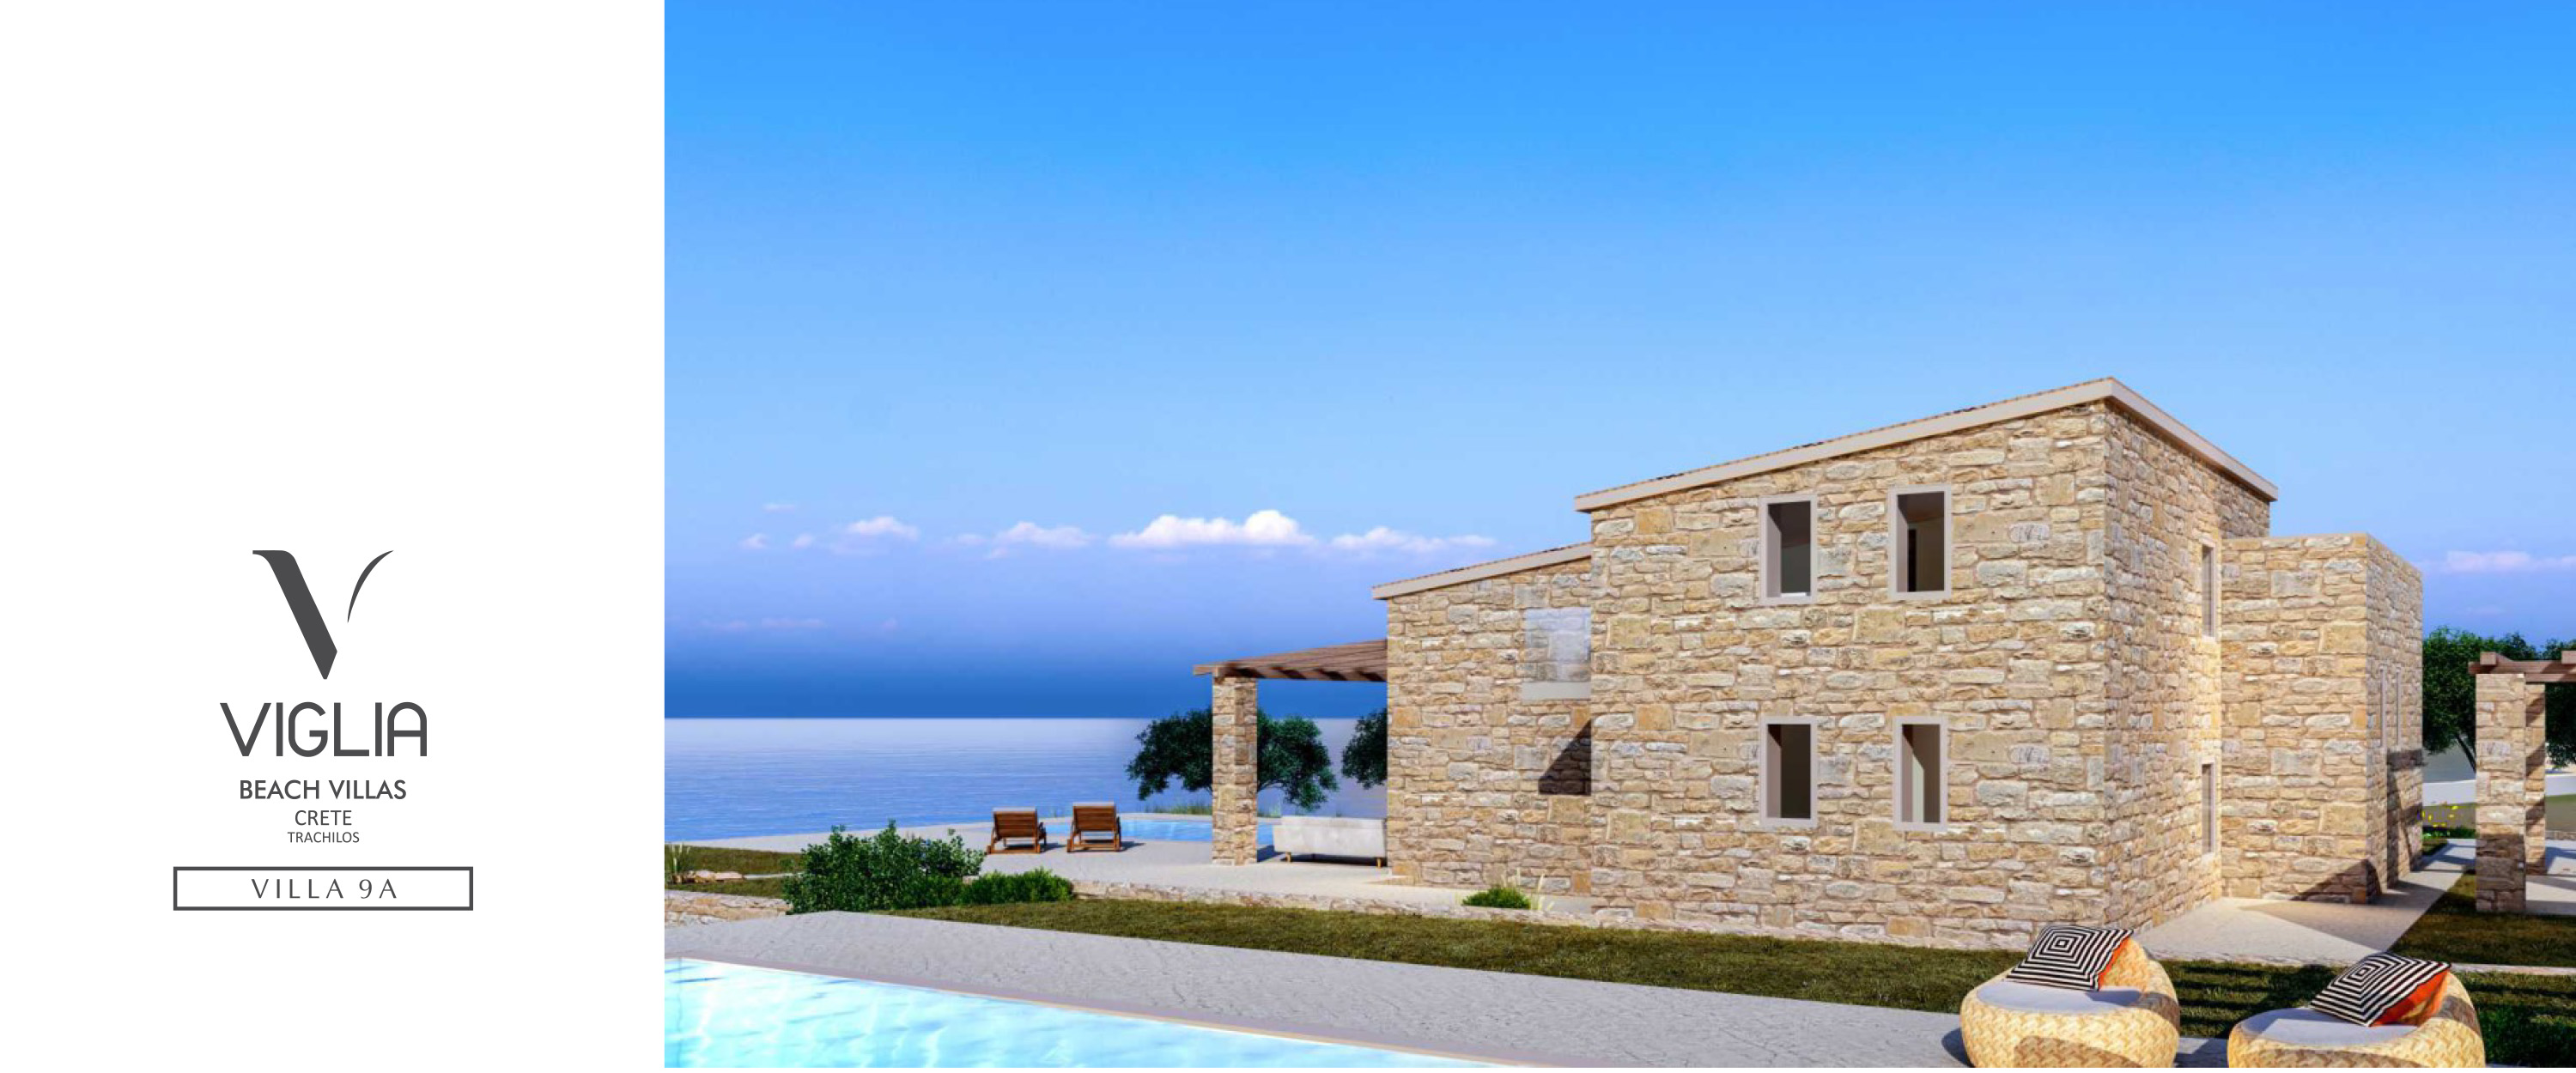 Viglia Beach Villas 3 bedroom Villa  at Kastelli - Crete 